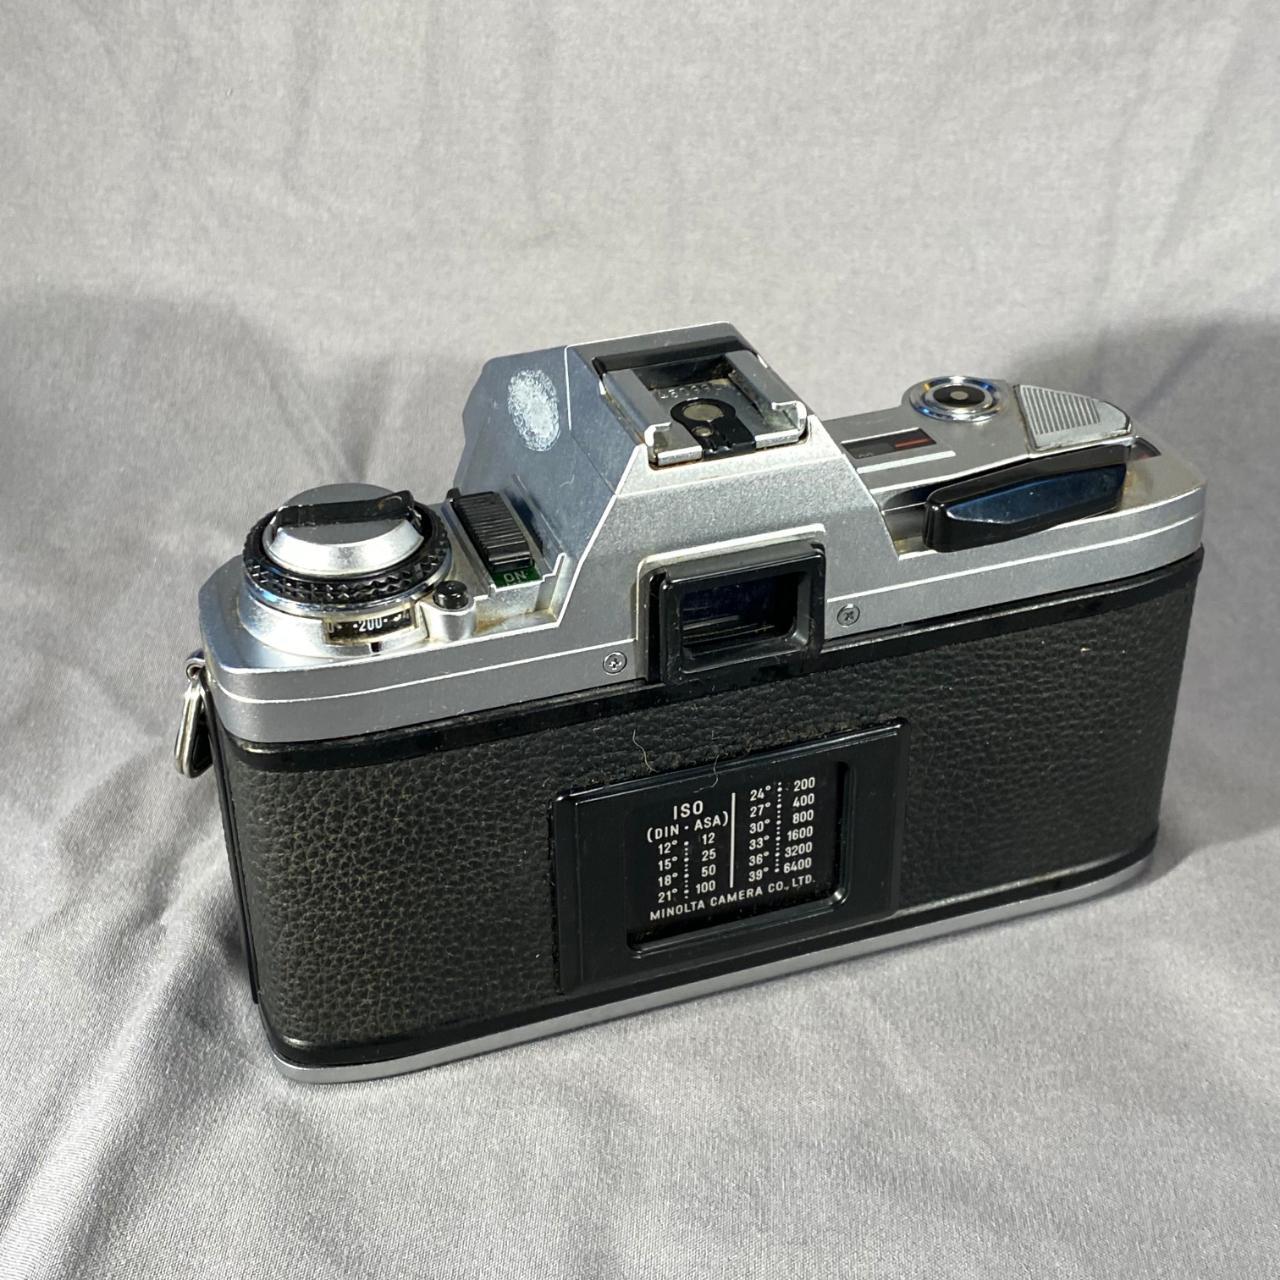 Minolta Silver Cameras-and-accessories (2)